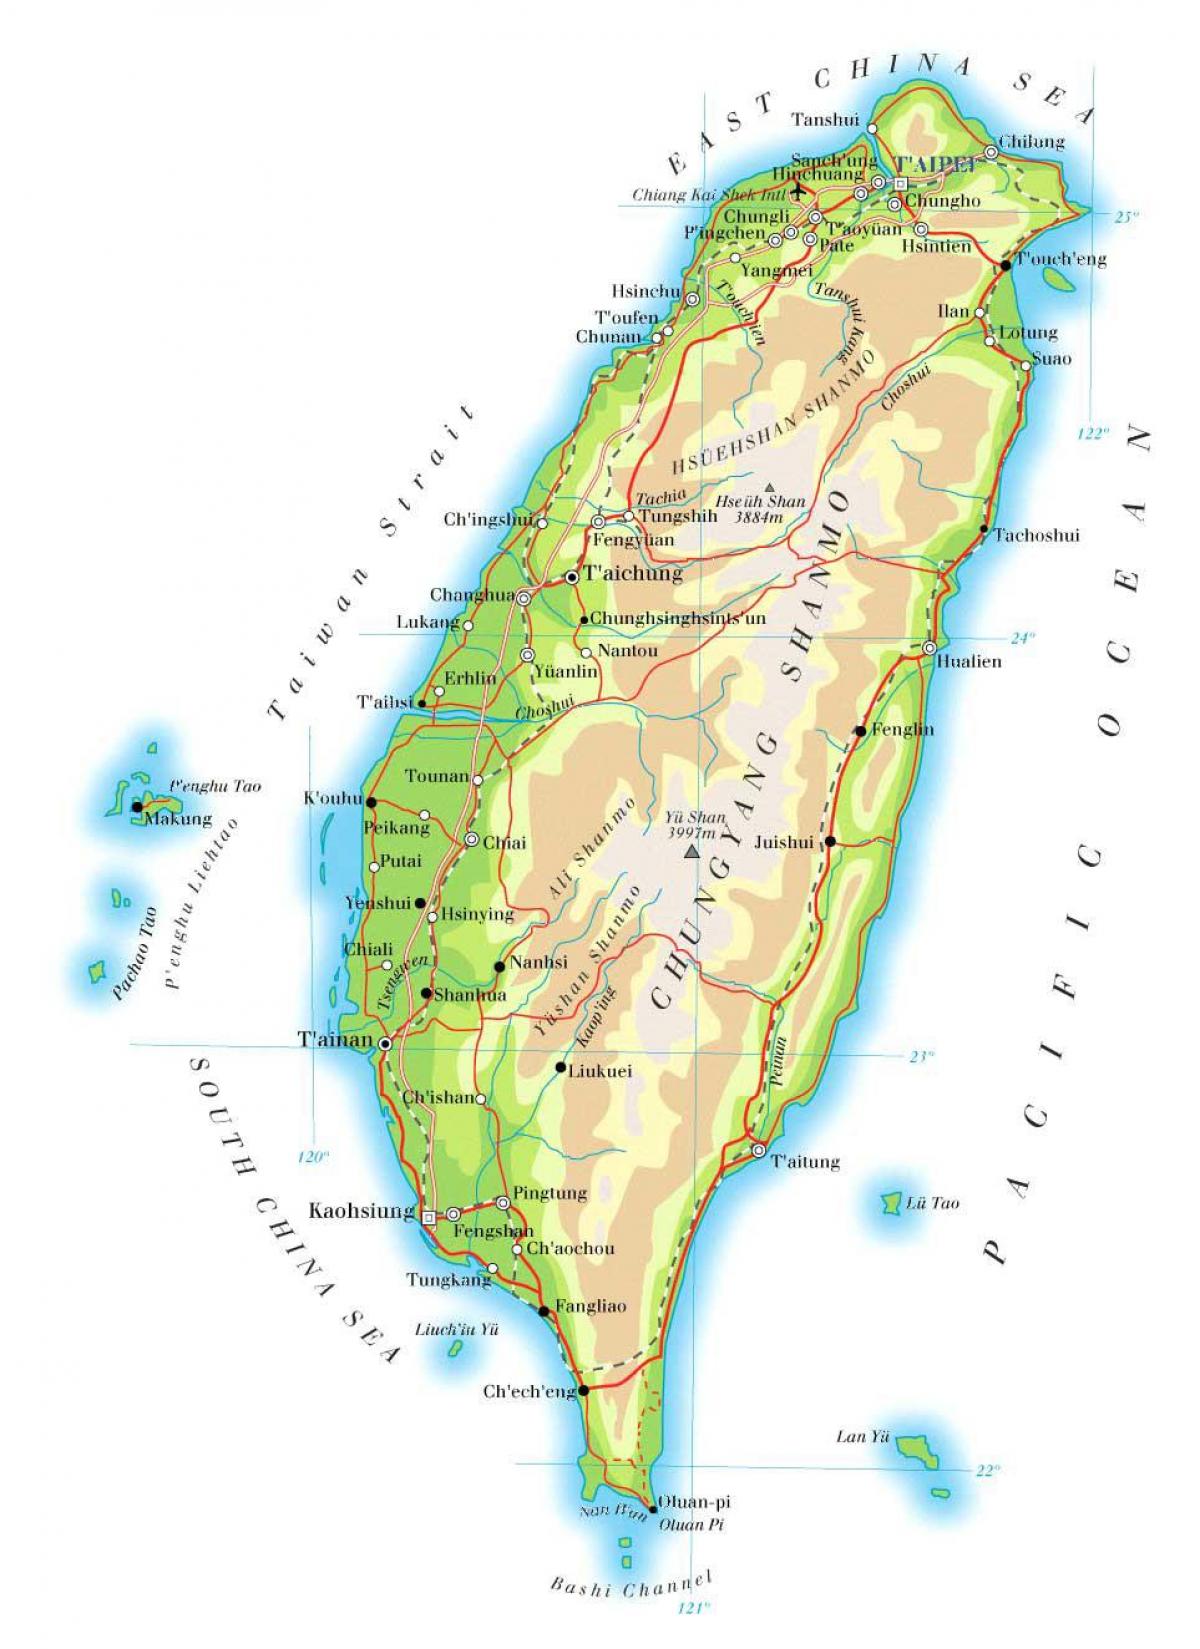 Где тайвань карте показать. Тайвань карта географическая. Карта Тайваня на русском языке. Остров Тайвань на карте Евразии. Карта Тайваня в Тайване.